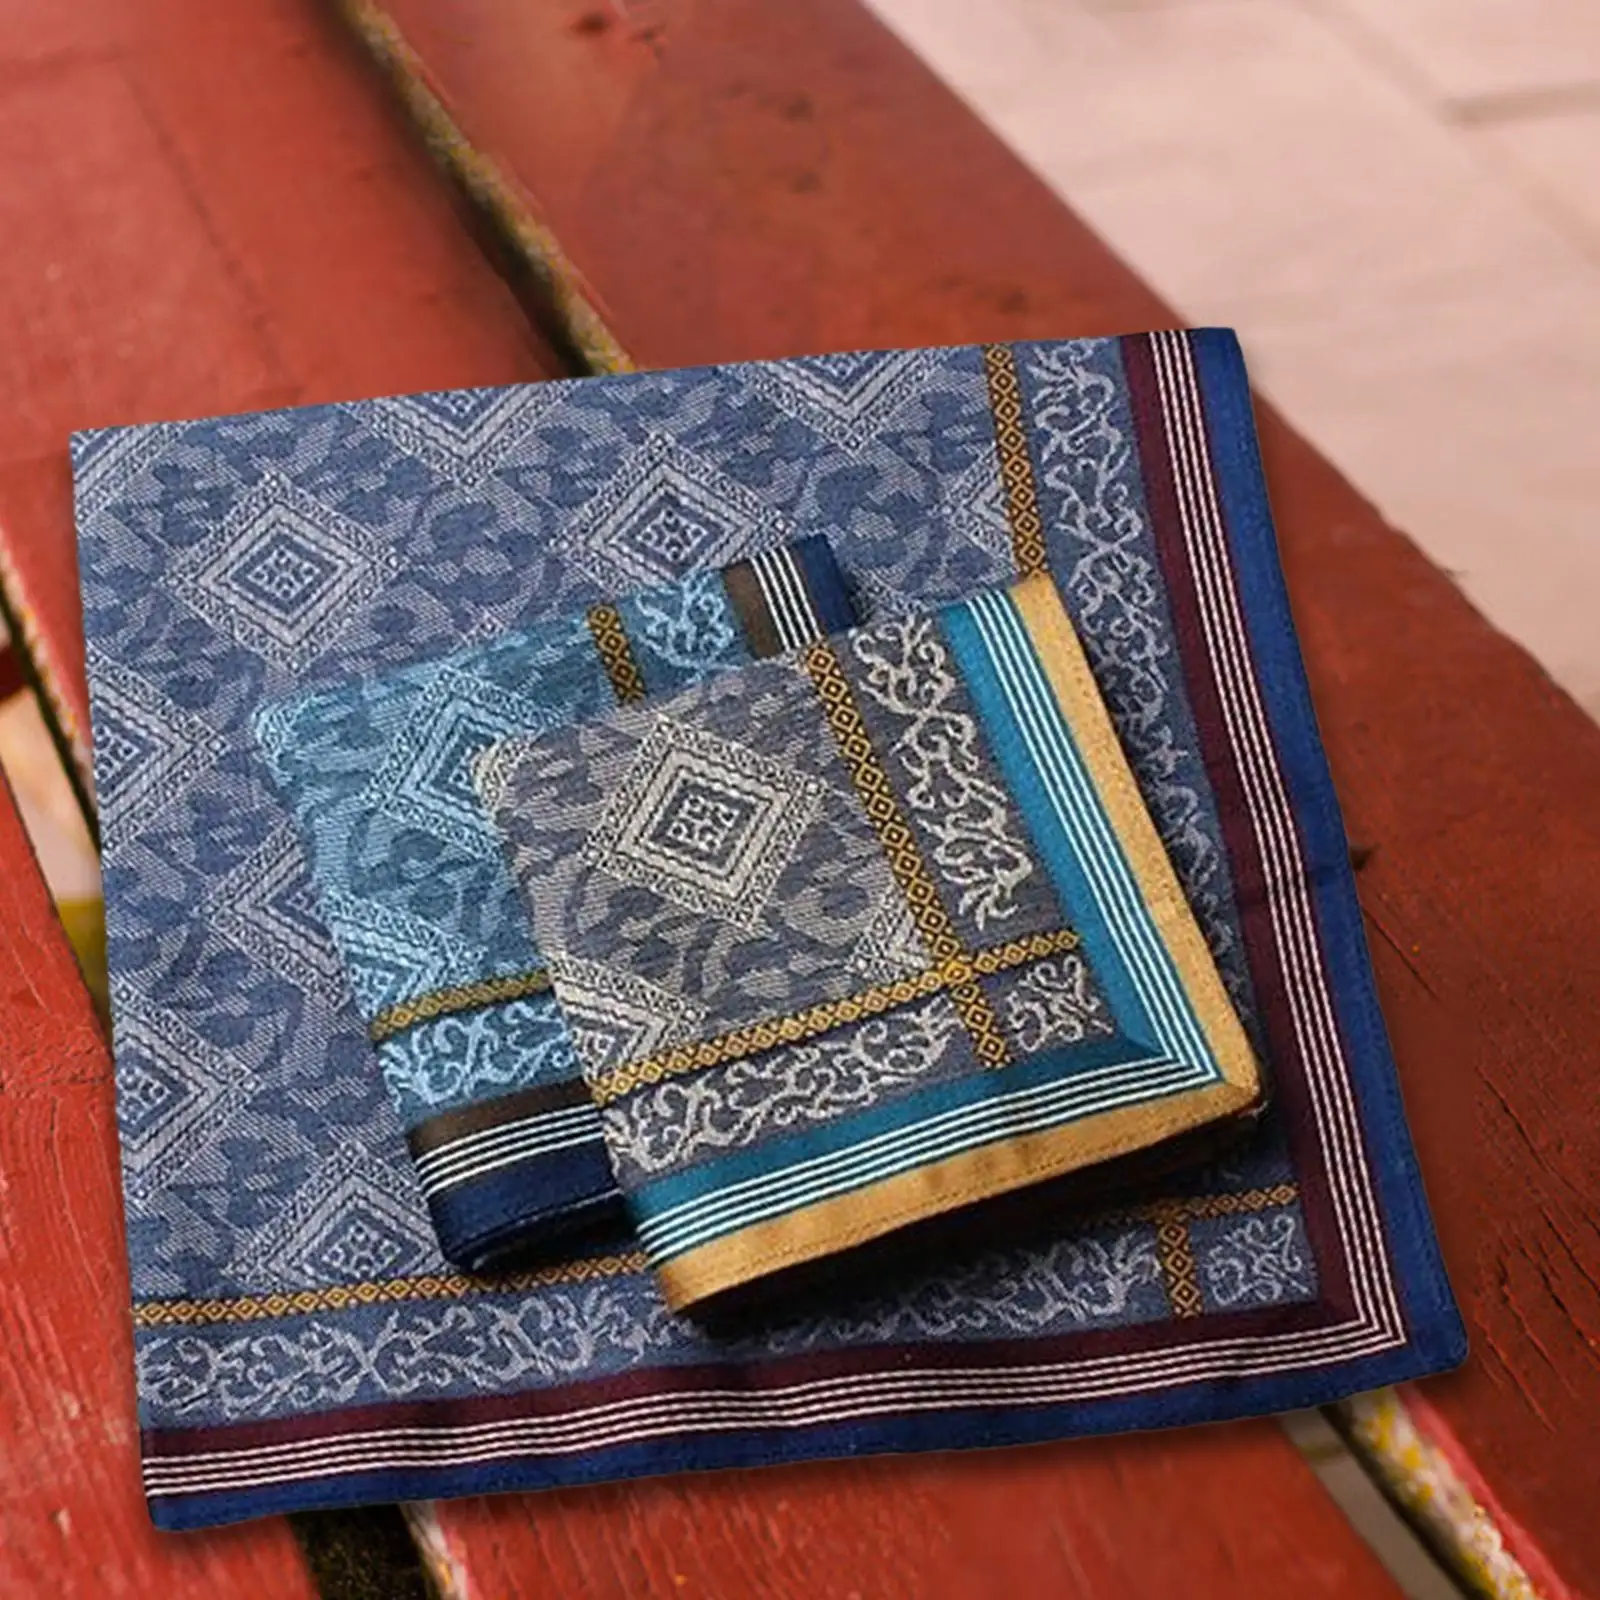 3Pcs Assorted Pocket Square Hankies Cotton Mens Handkerchief for Grooms Prom